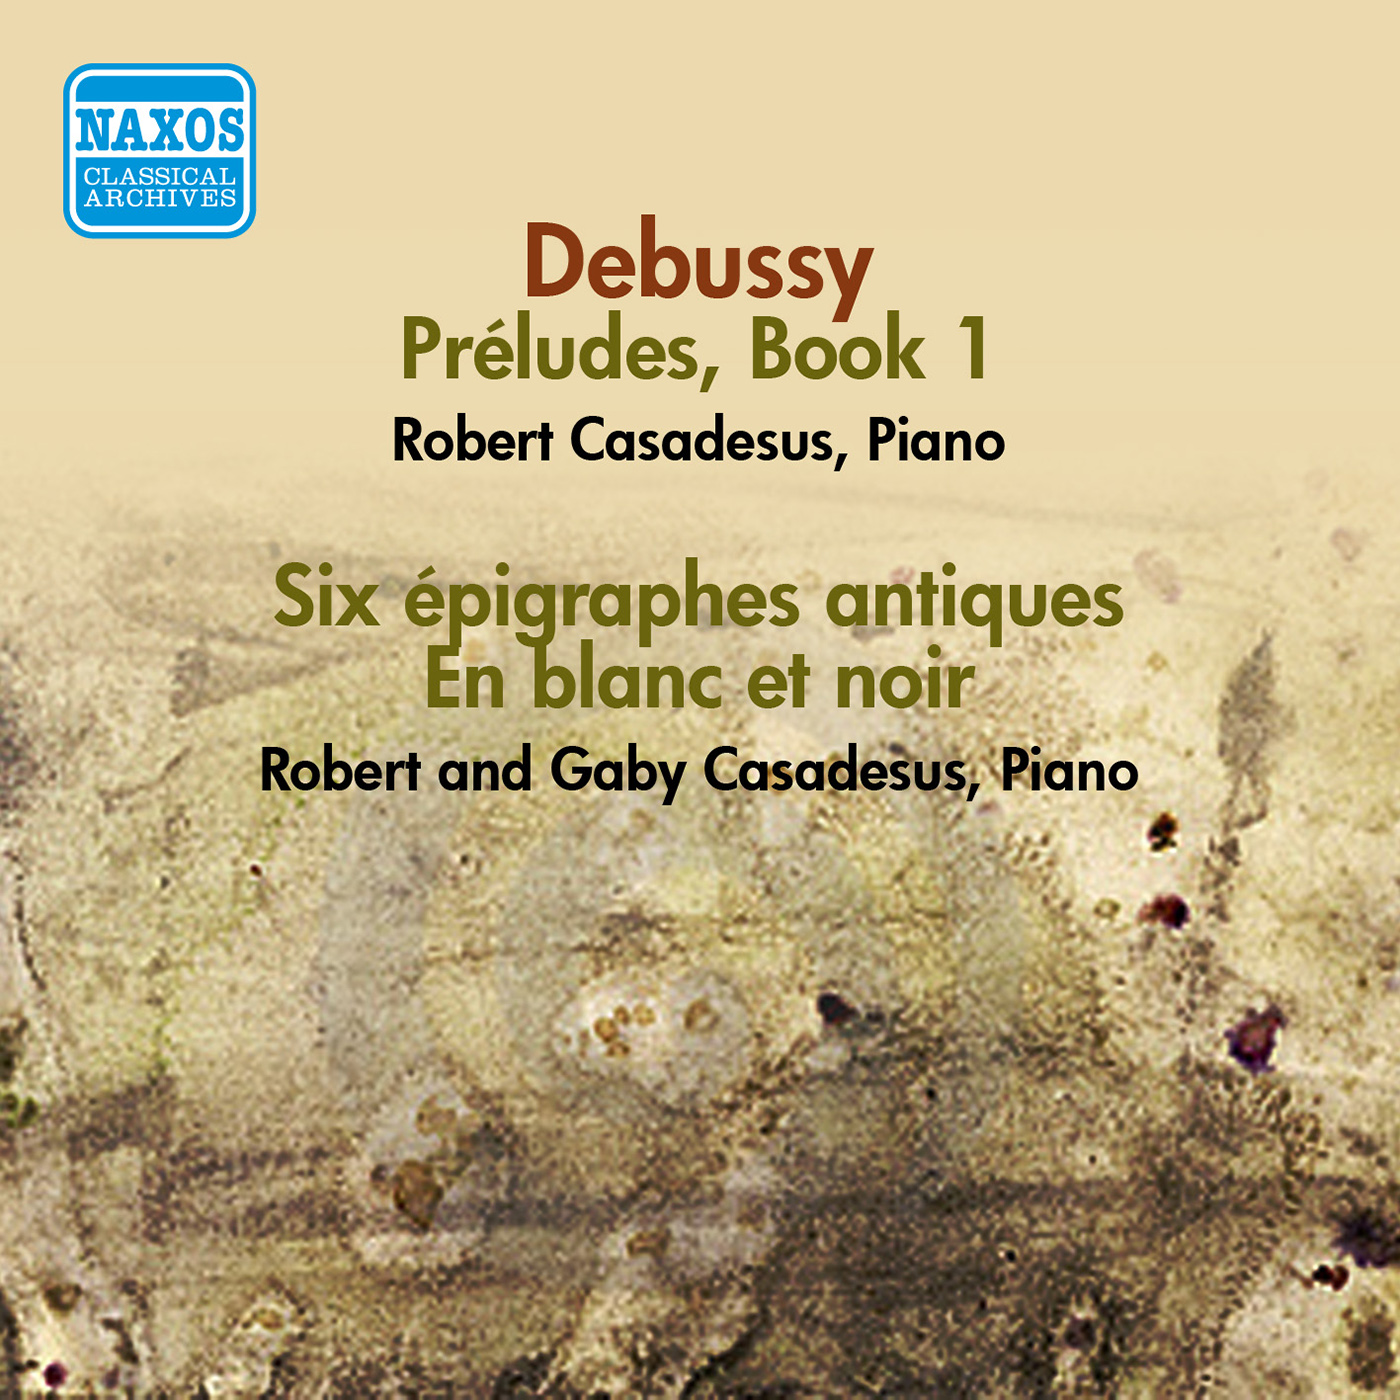 DEBUSSY: Preludes, Book 1 / 6 Epigraphes antiques / En blanc et noir (Robert and Gaby Casadesus) (1956)